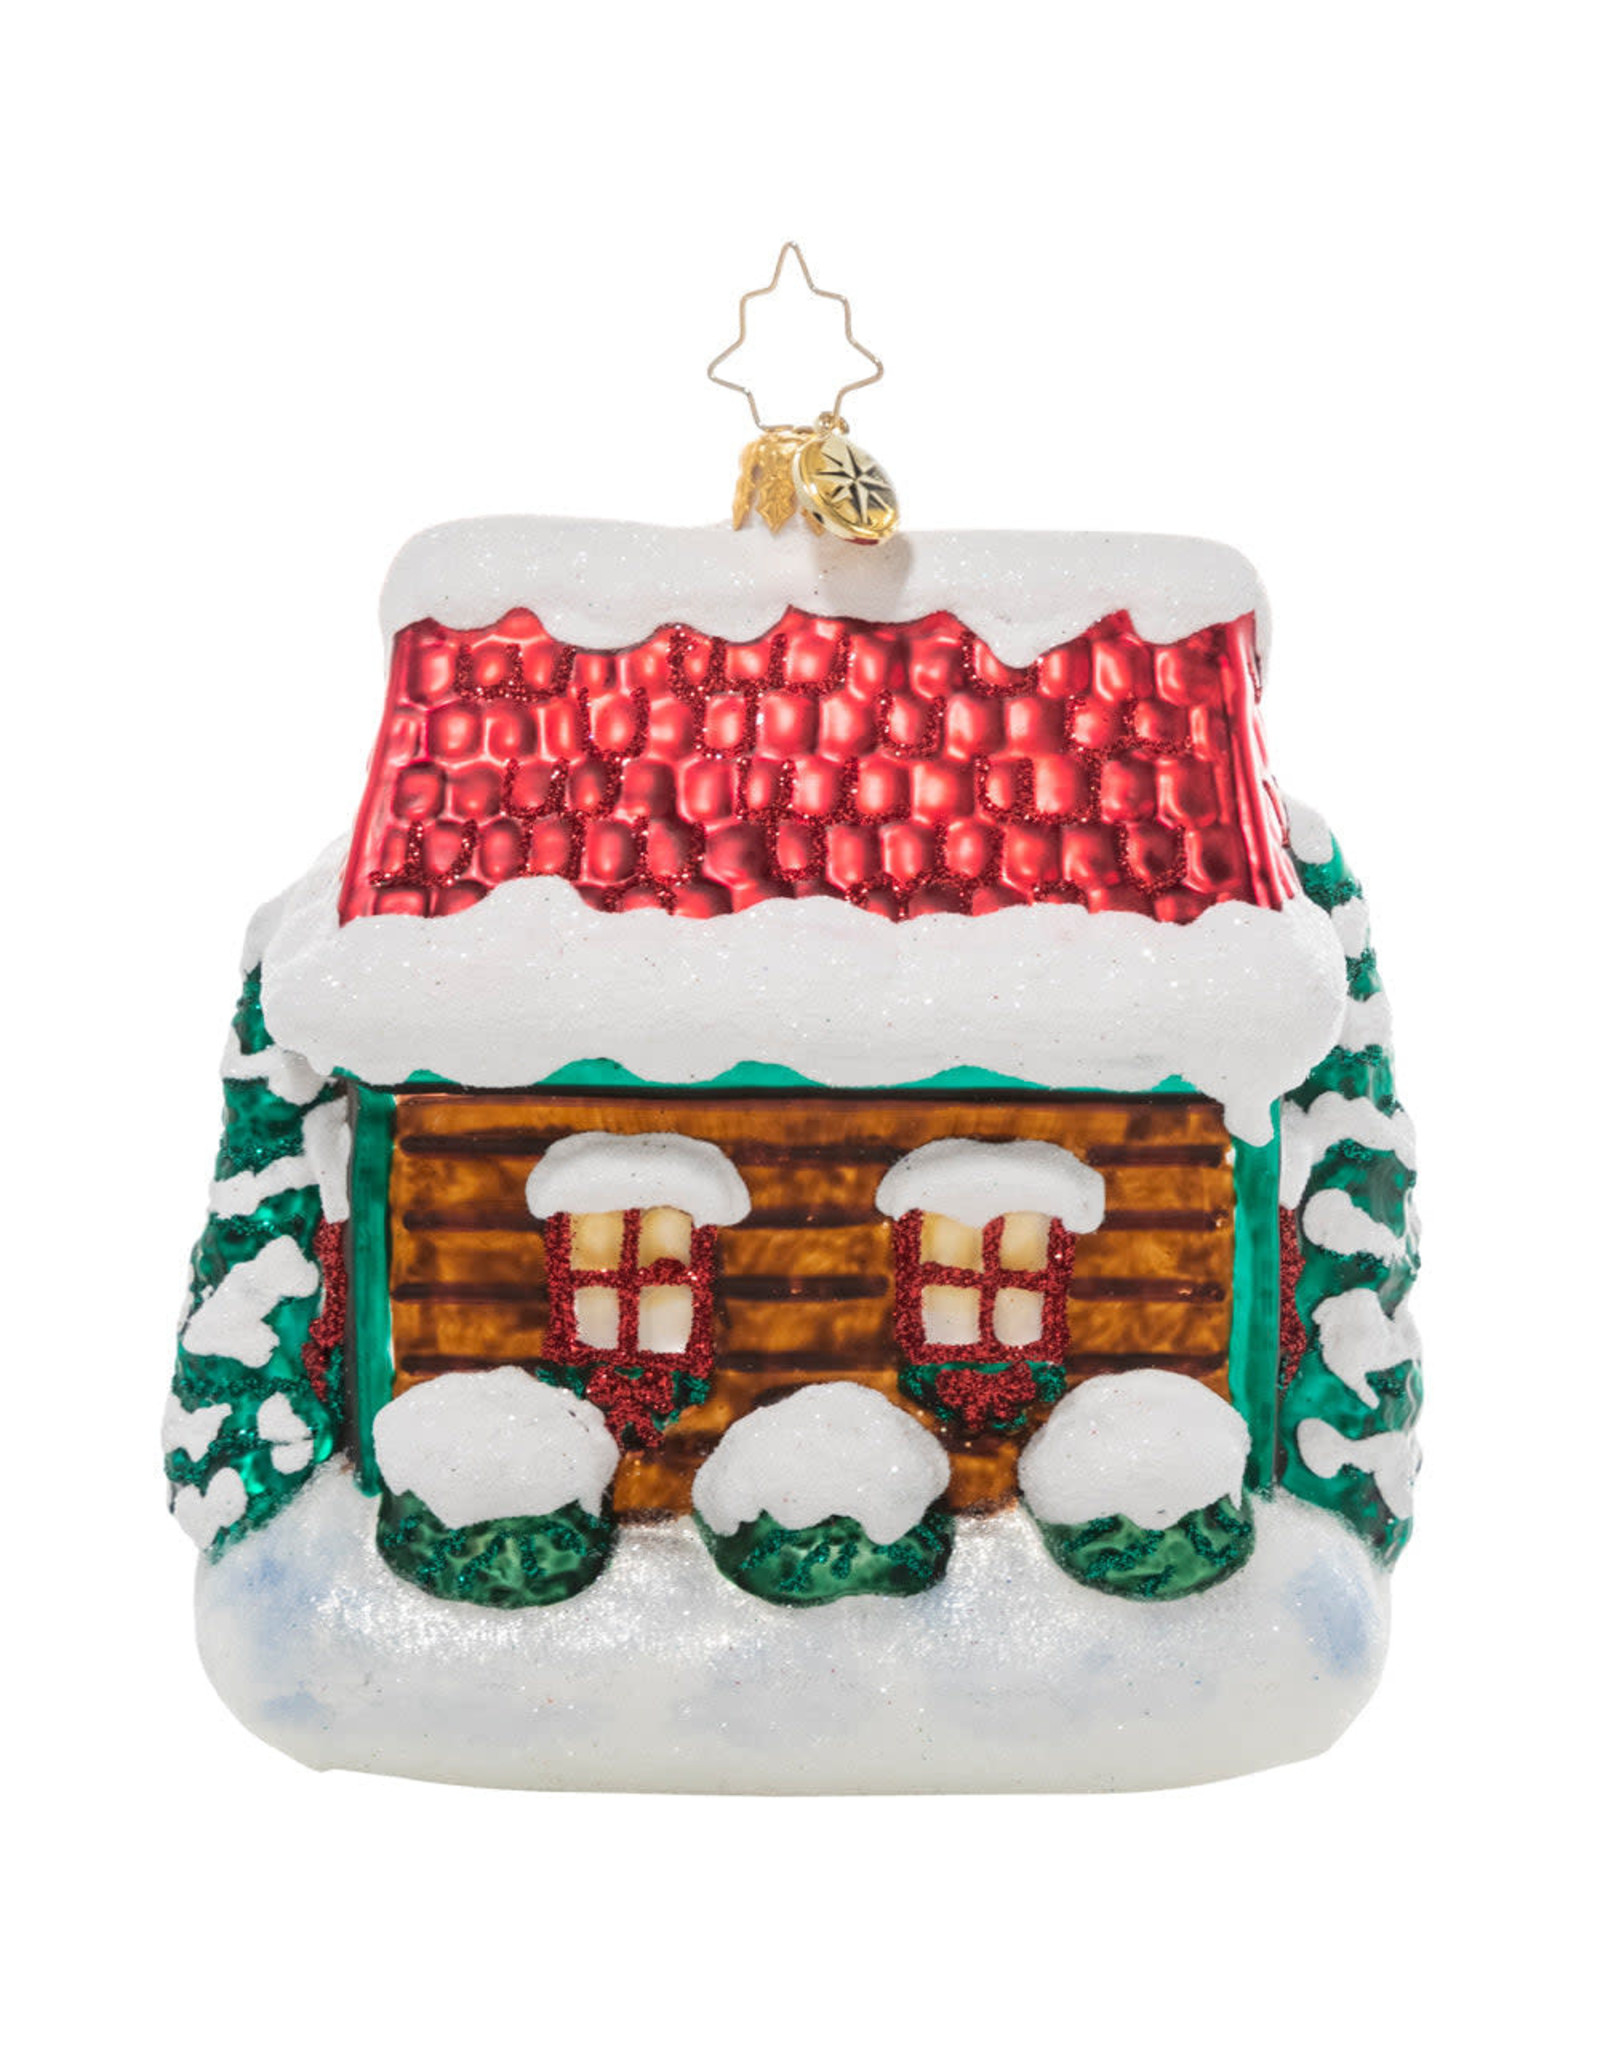 Christopher Radko The Coziest Cottage Christmas Ornament